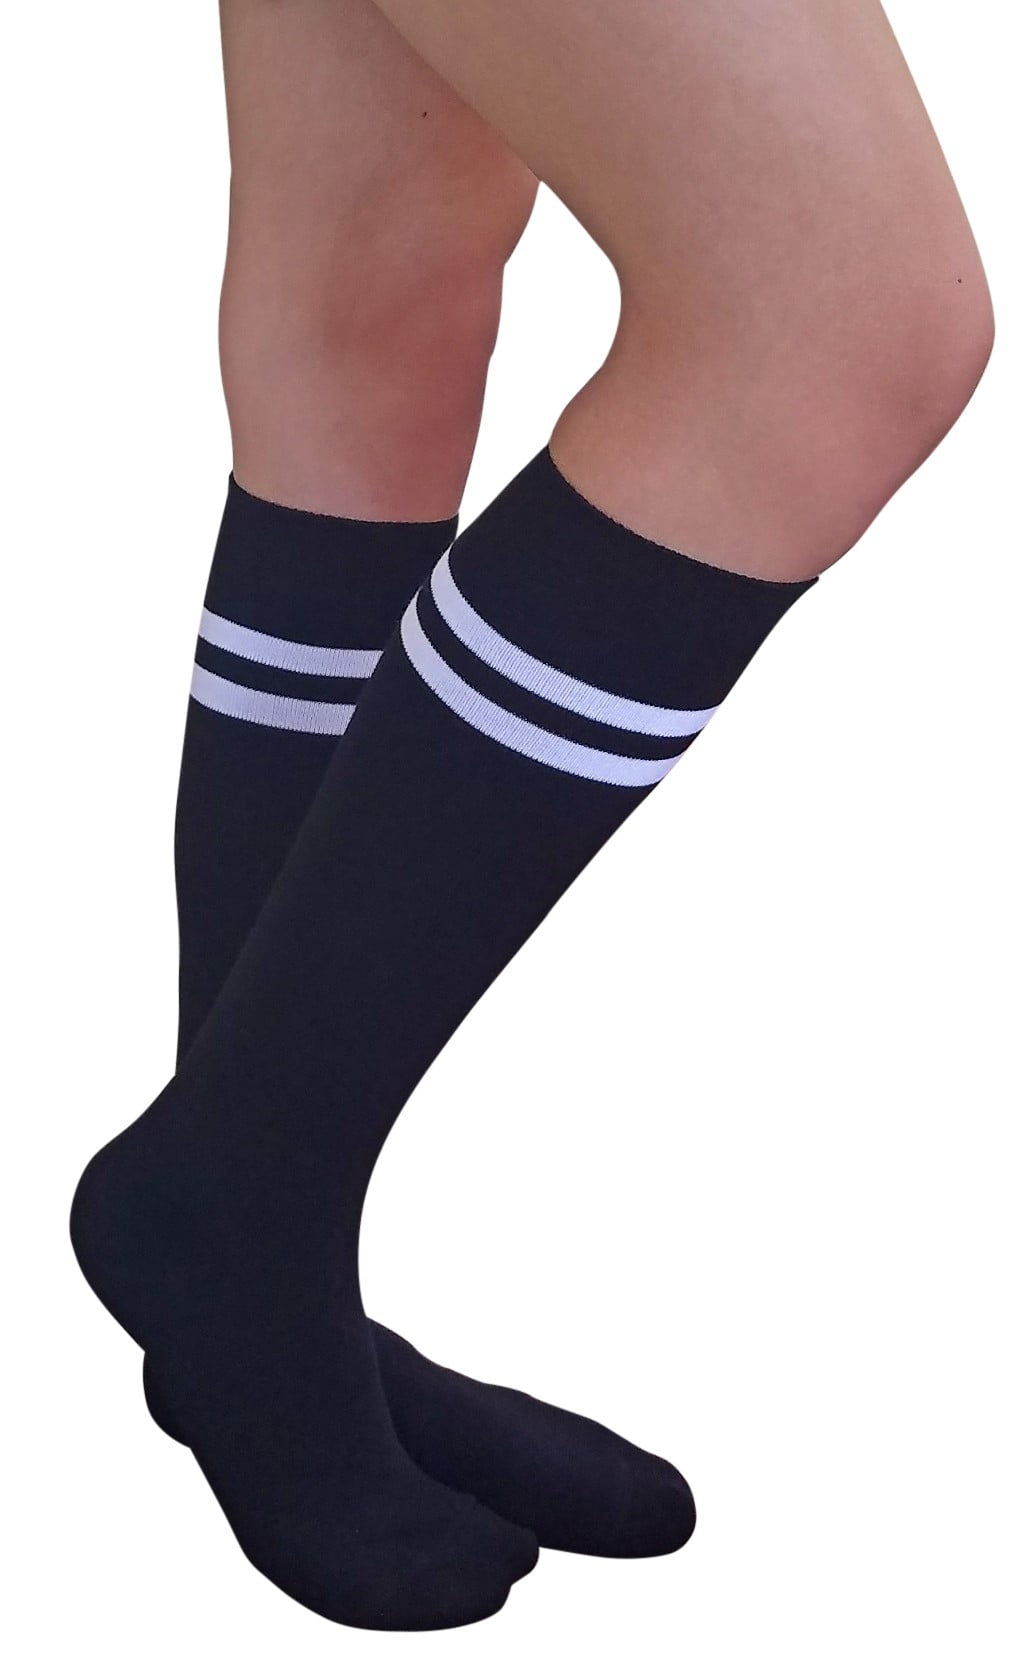 Cheer knee high socks